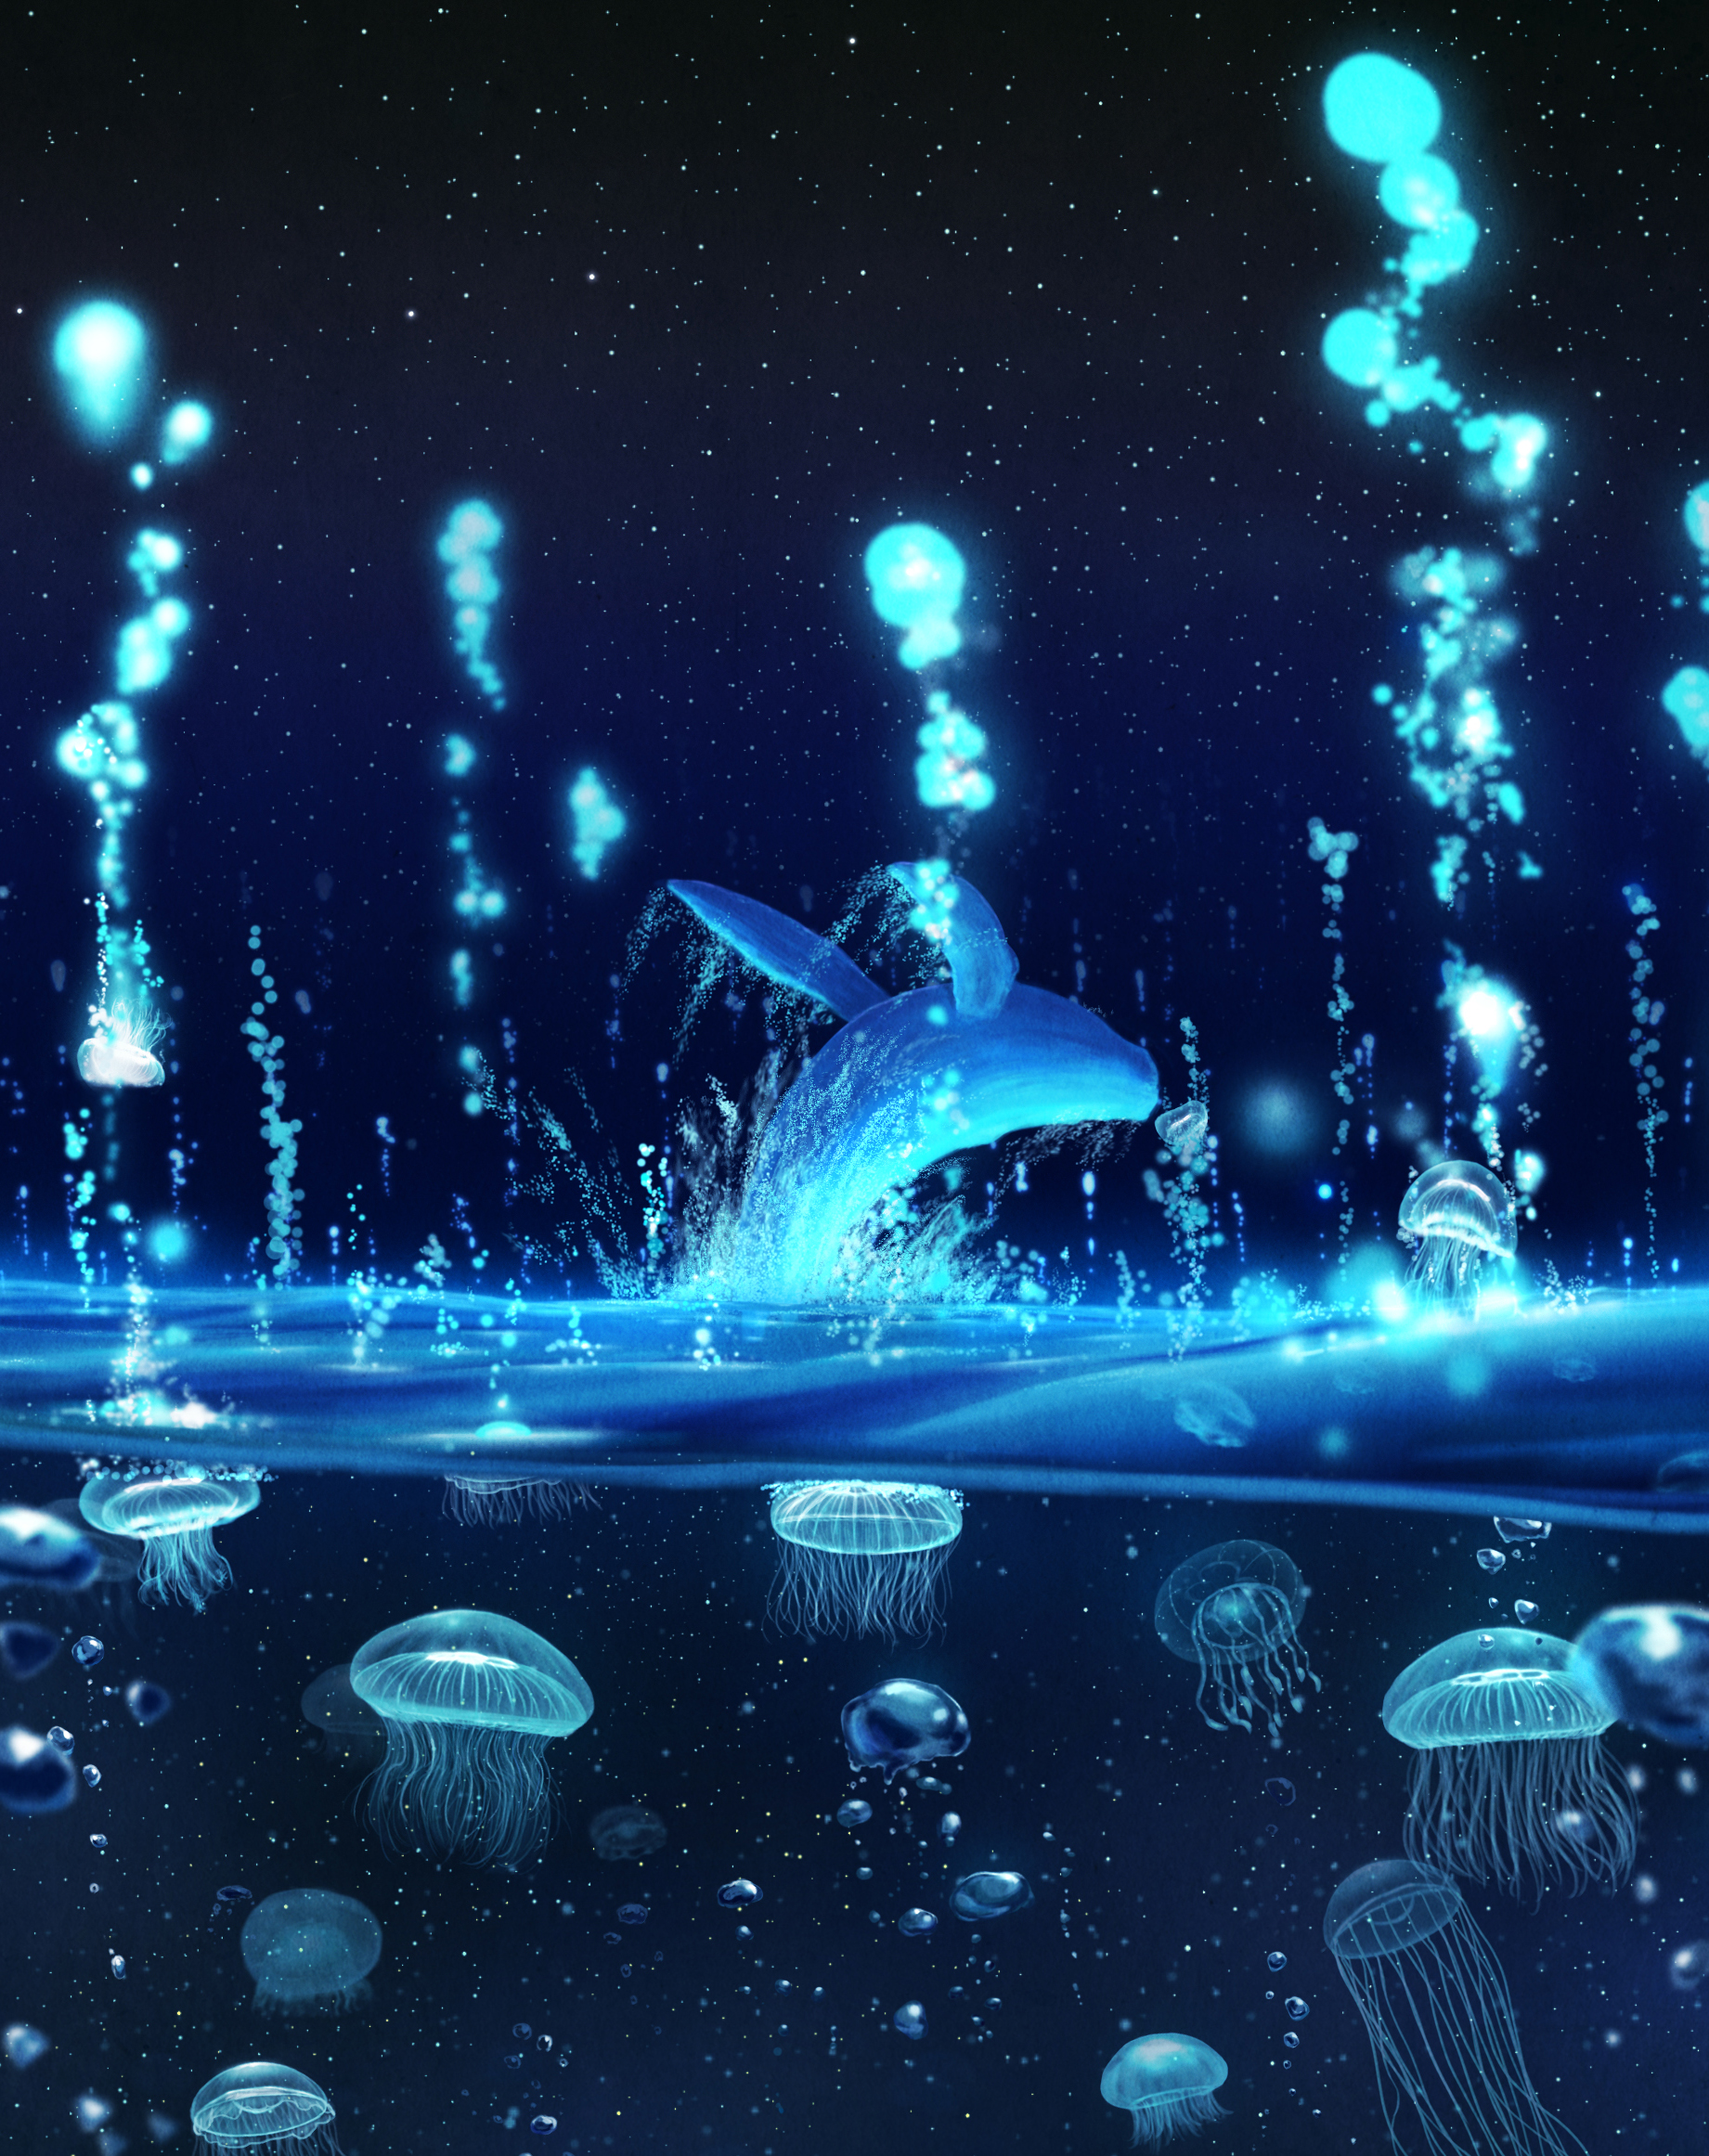 General 1841x2323 kuroneko no pei sea night fish glowing stars jellyfish whale portrait display animals water nature sky in water